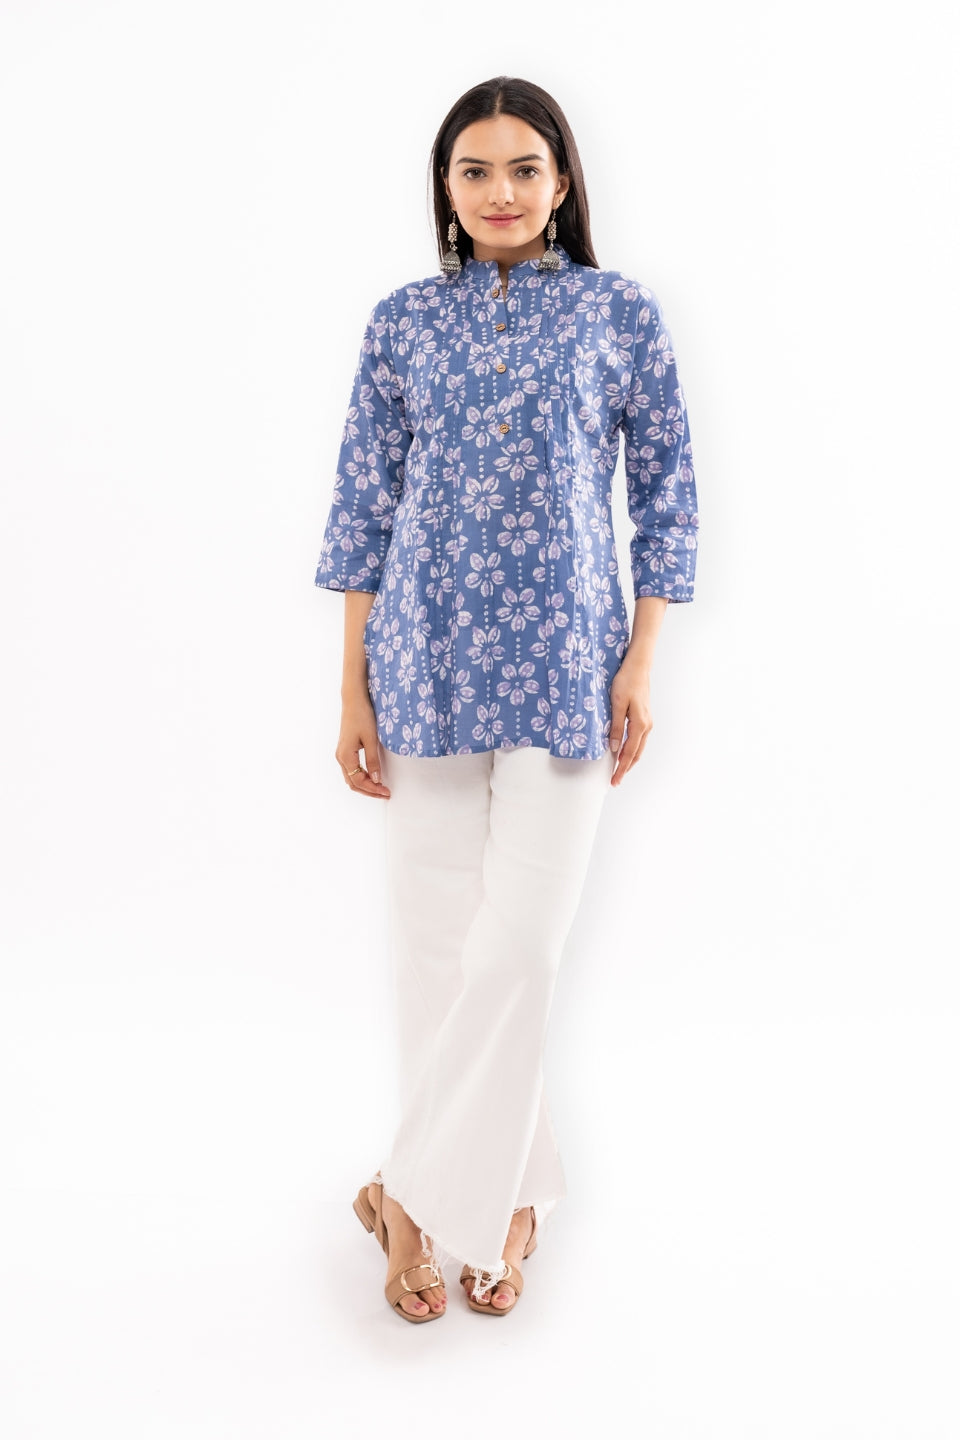 Ekisha's women blue floral printed cotton tunic top short kurti, front view